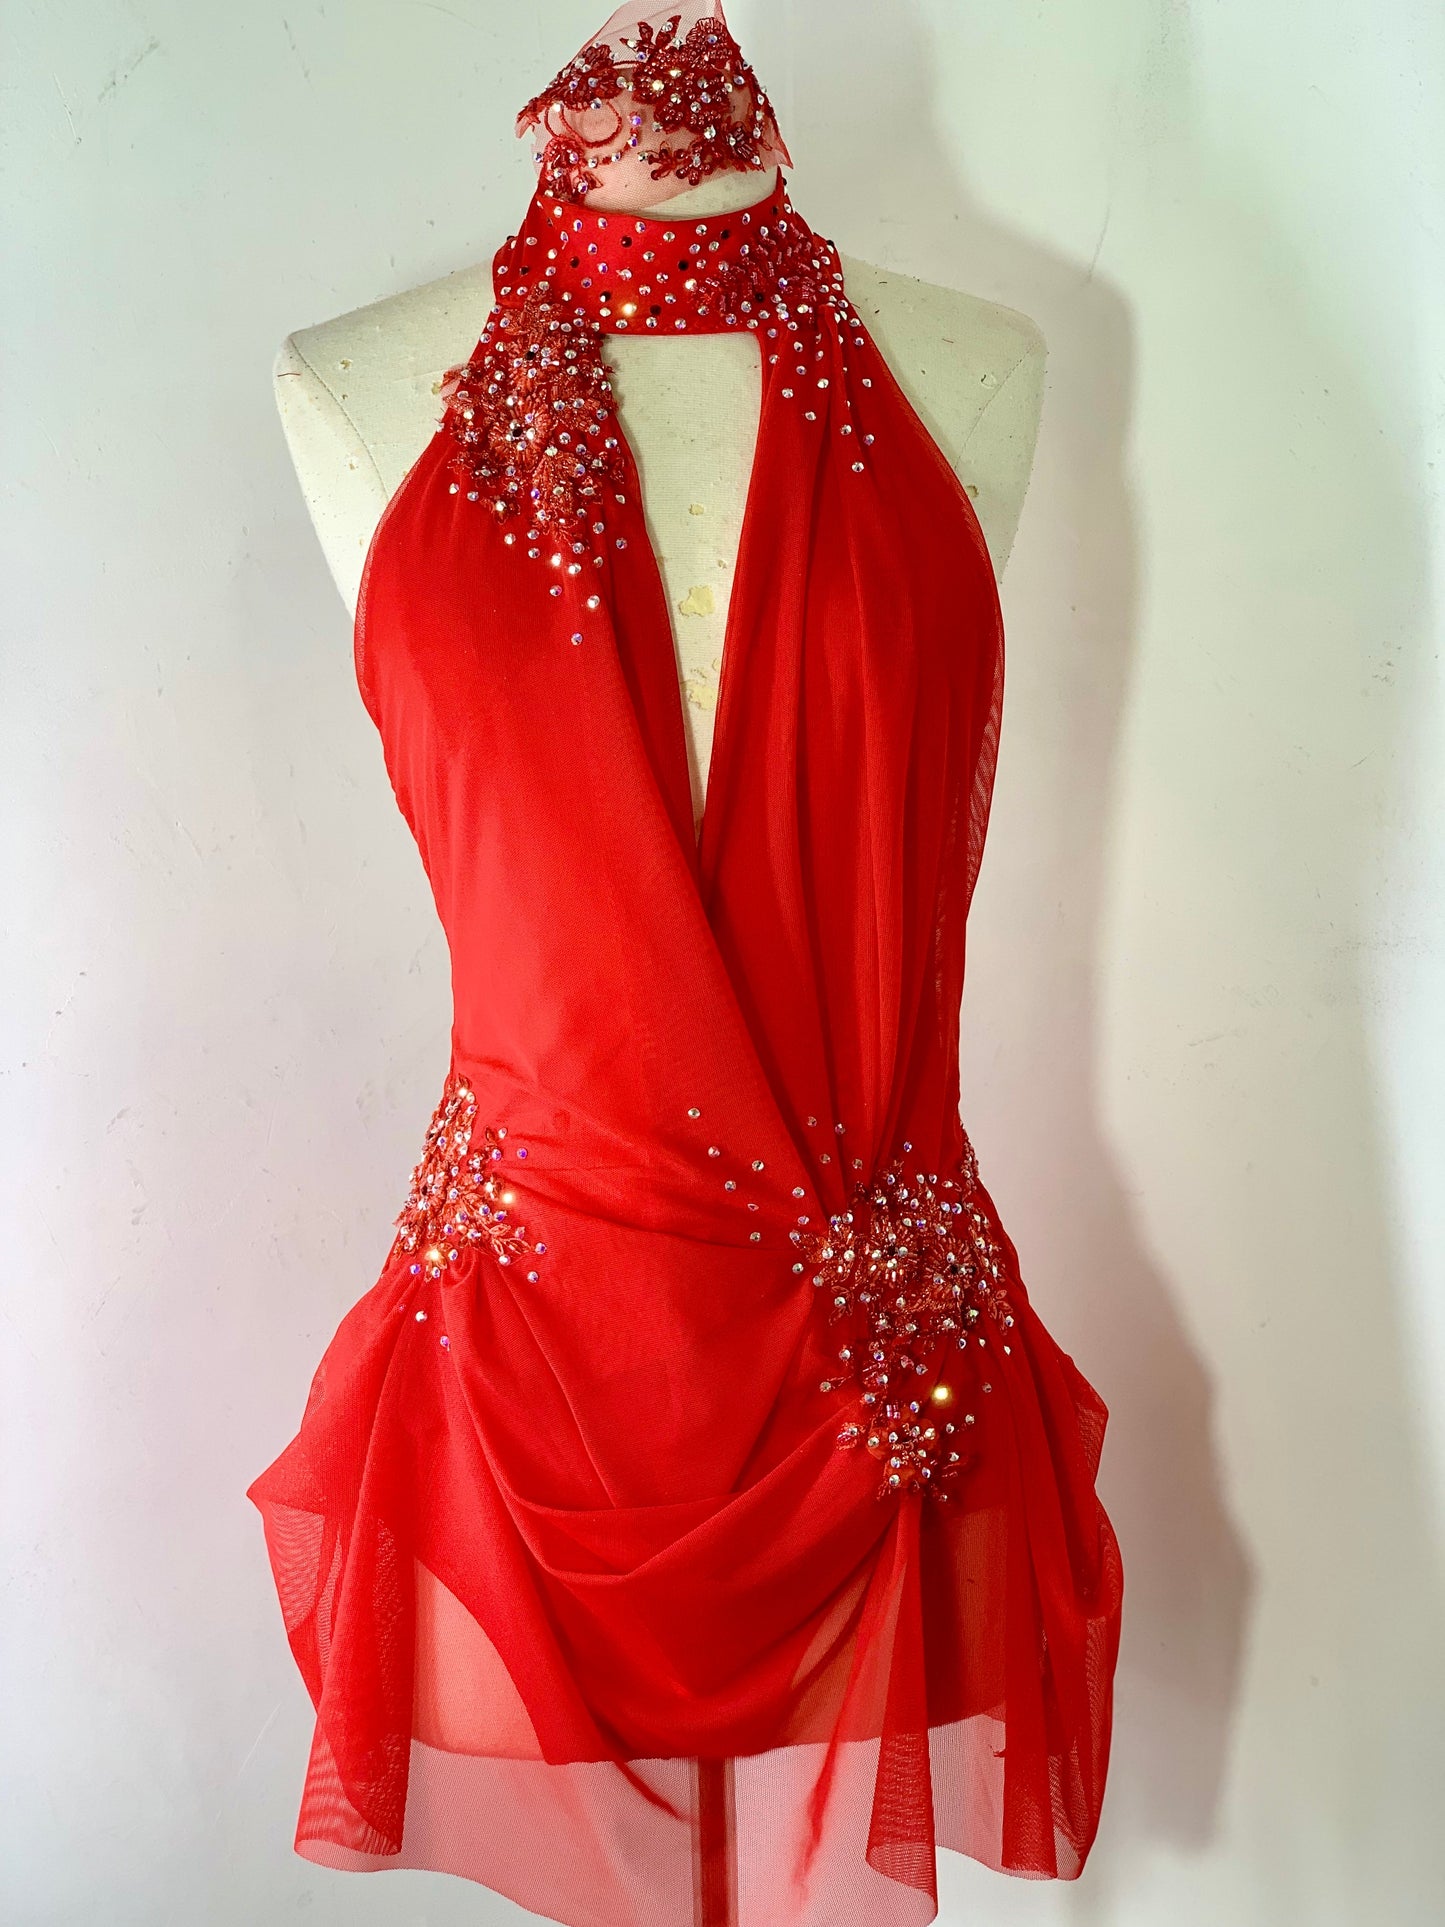 Mallard Draped red dance dress